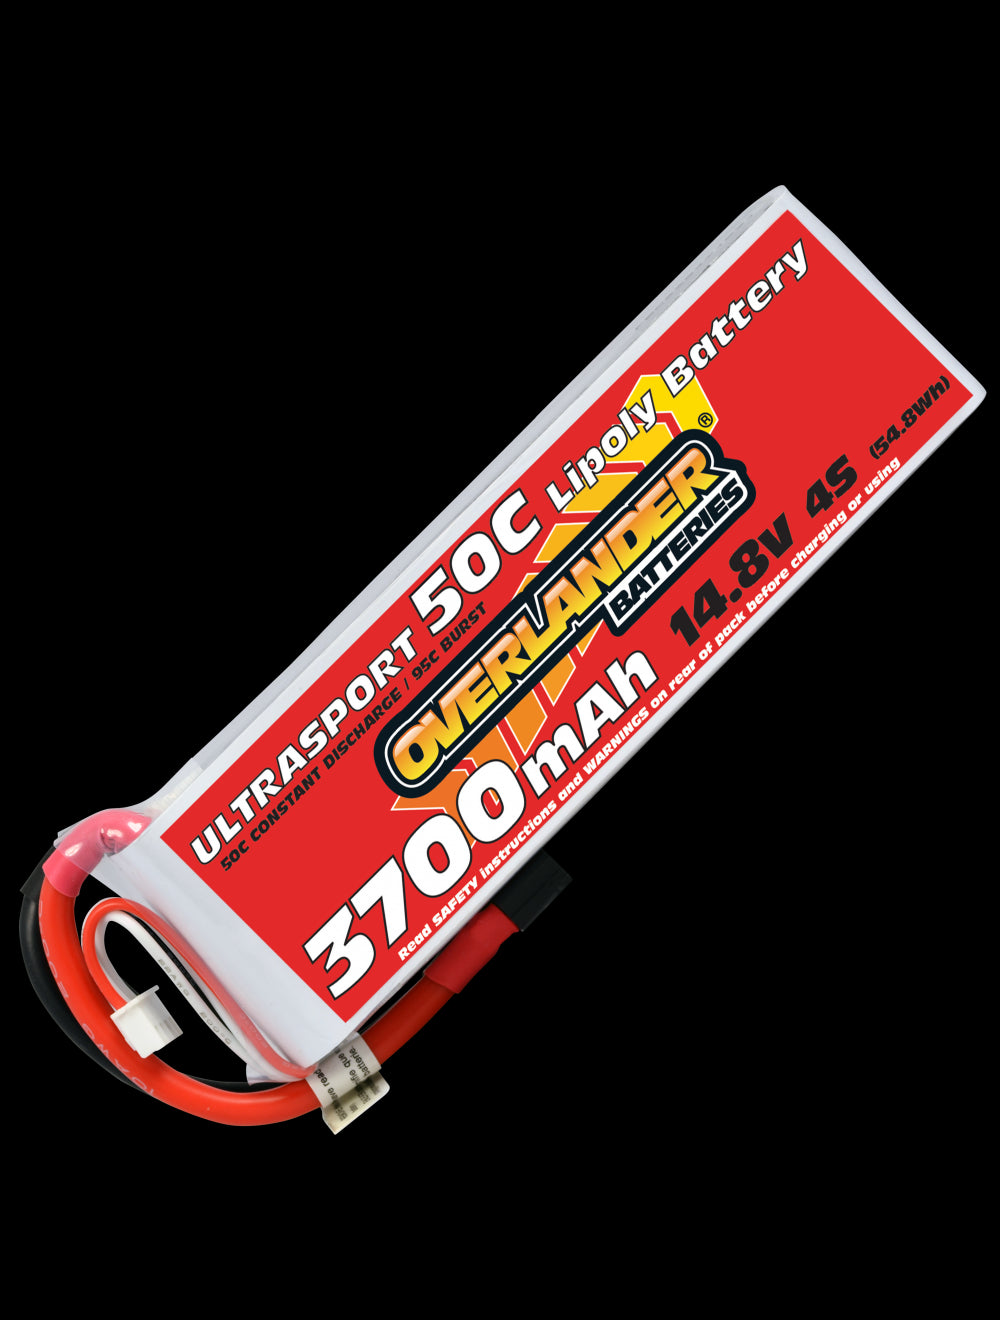 Overlander 3700mAh 14.8V 4S 50C Ultrasport LiPo Battery - Deans Connector 2629